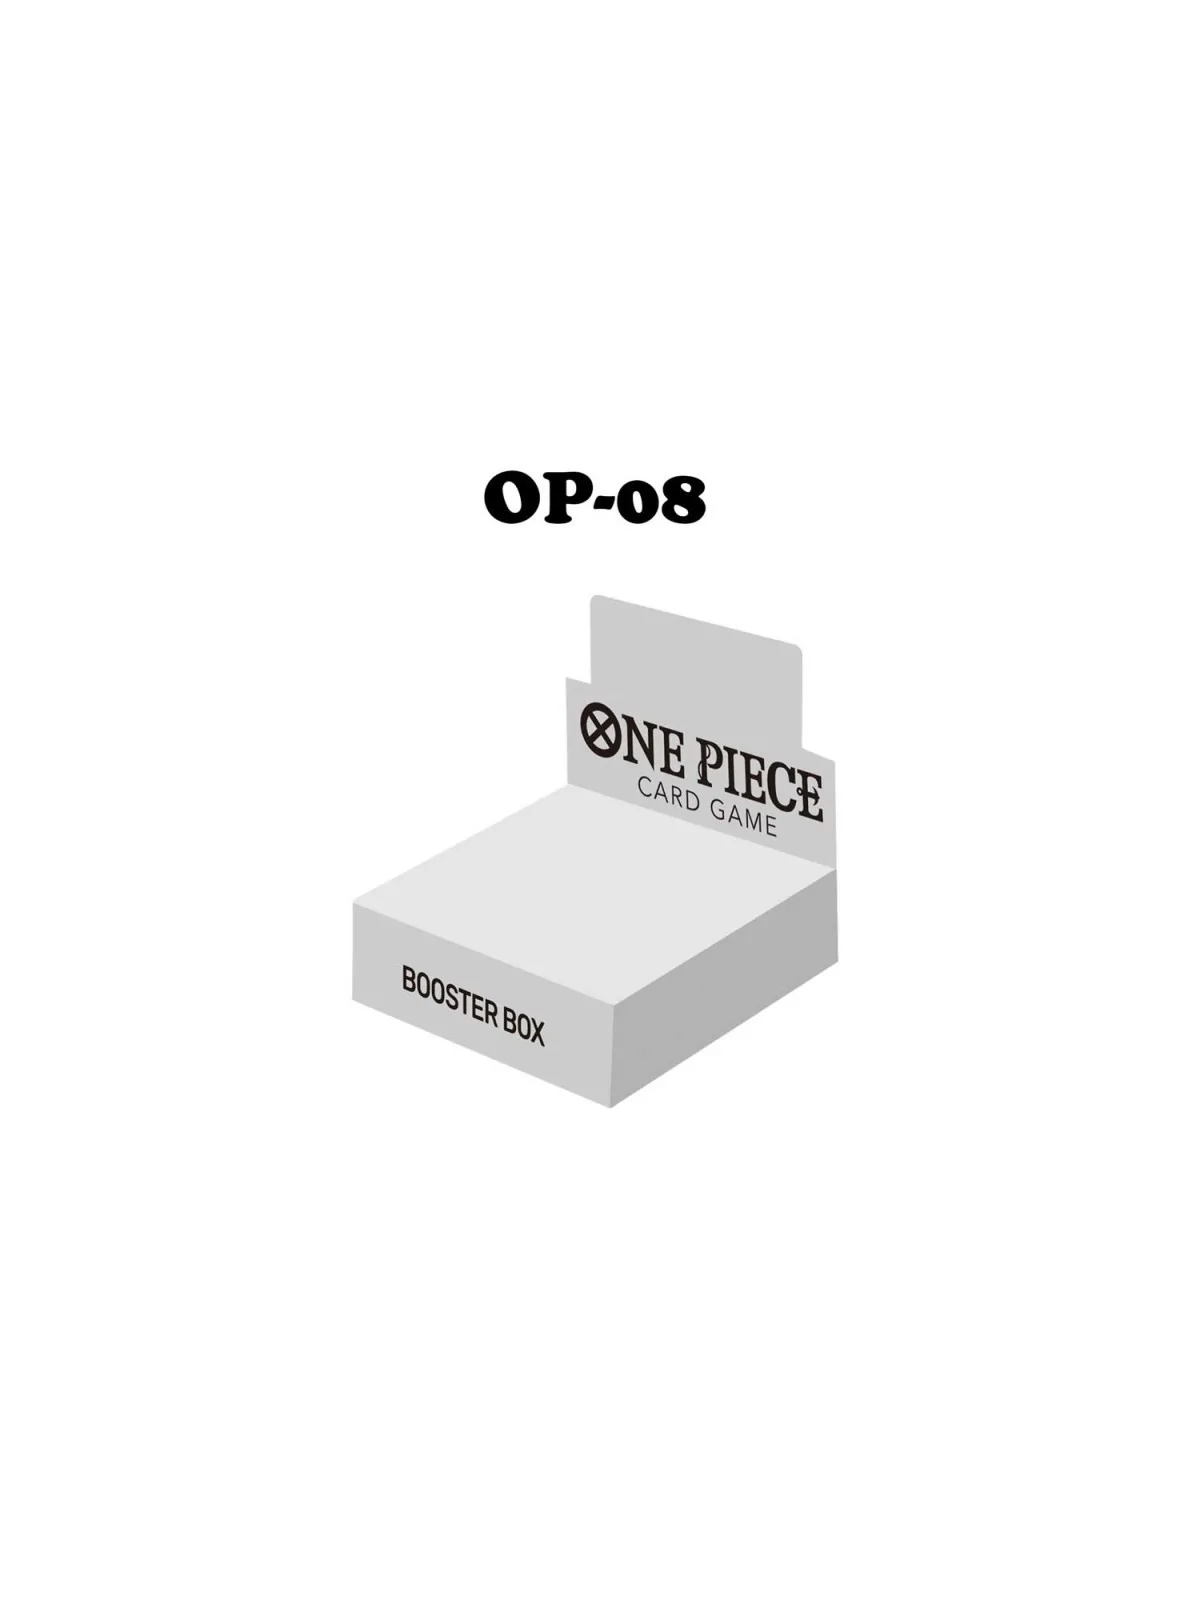 Comprar OPCG: Two Legends Booster Box OP08 (24) EN [PREVENTA] barato a